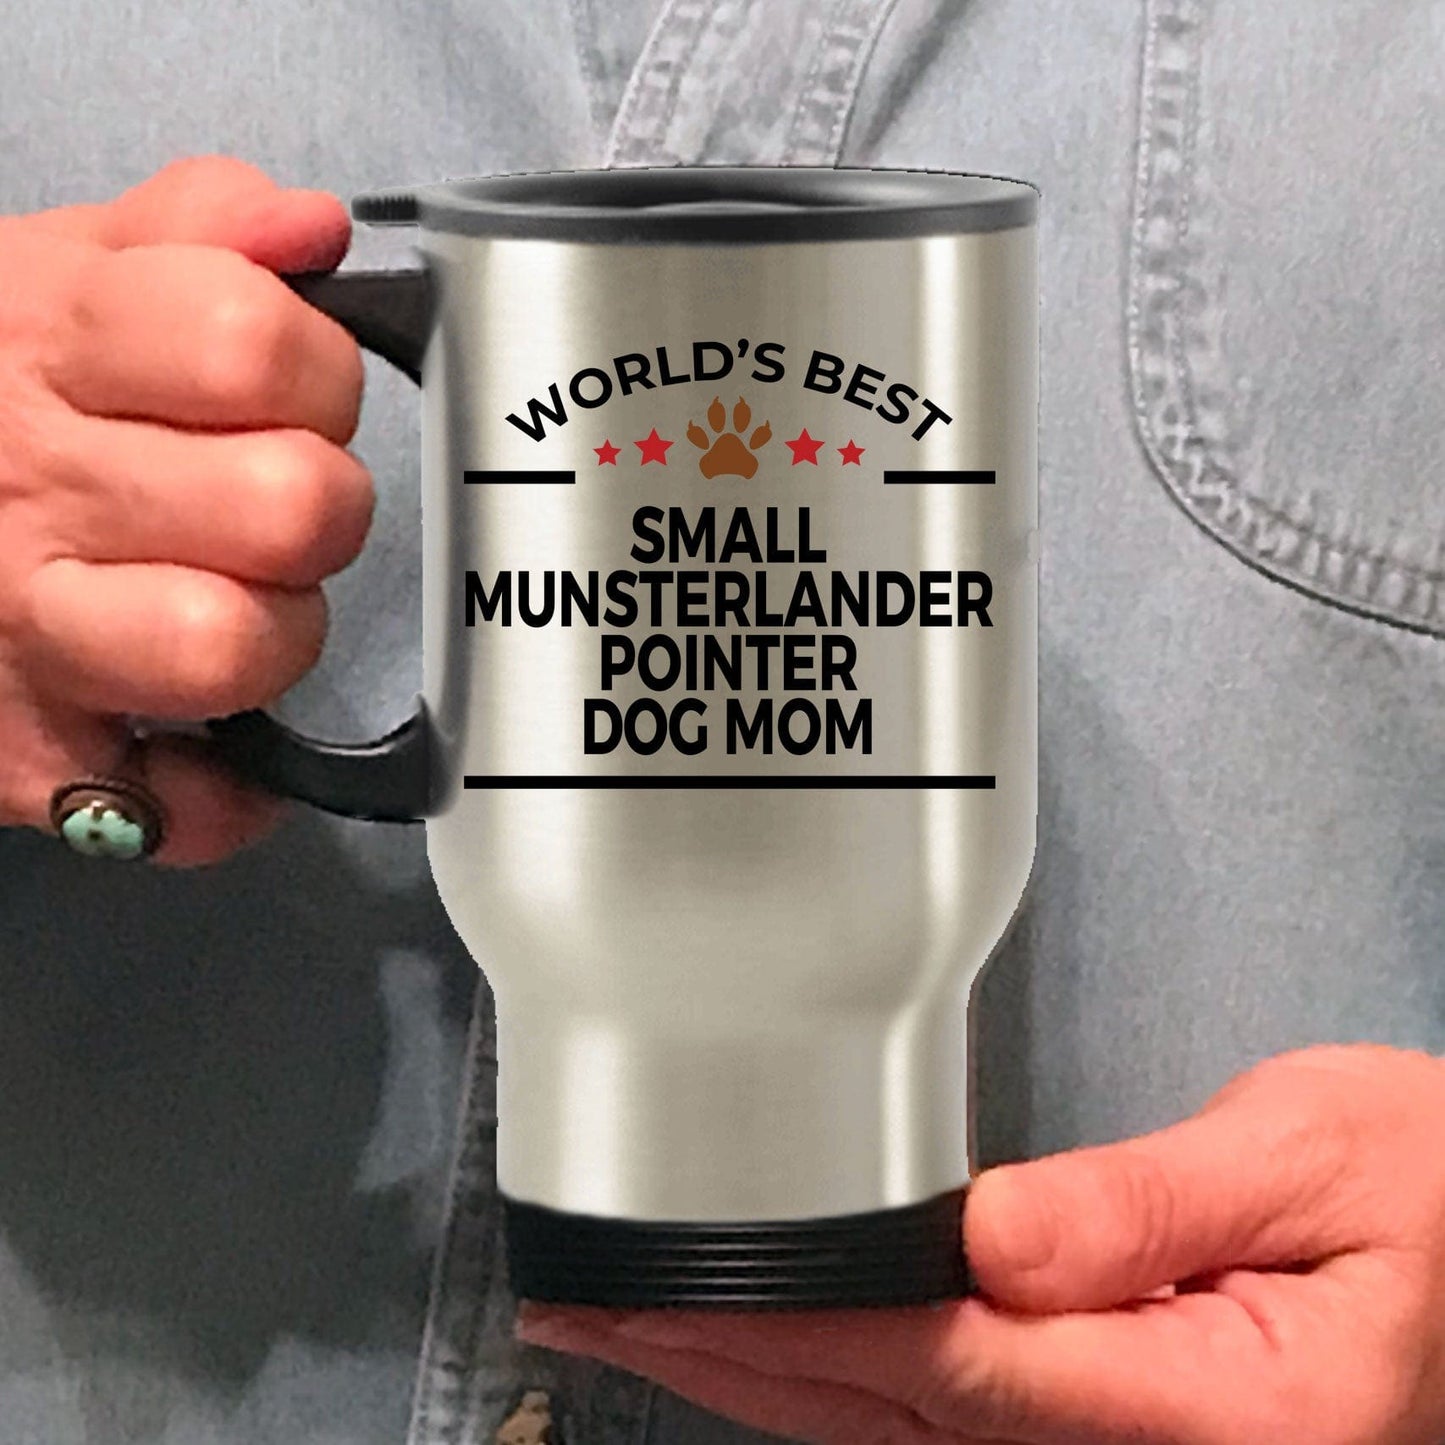 Small Munsterlander Pointer Dog Mom Travel Mug